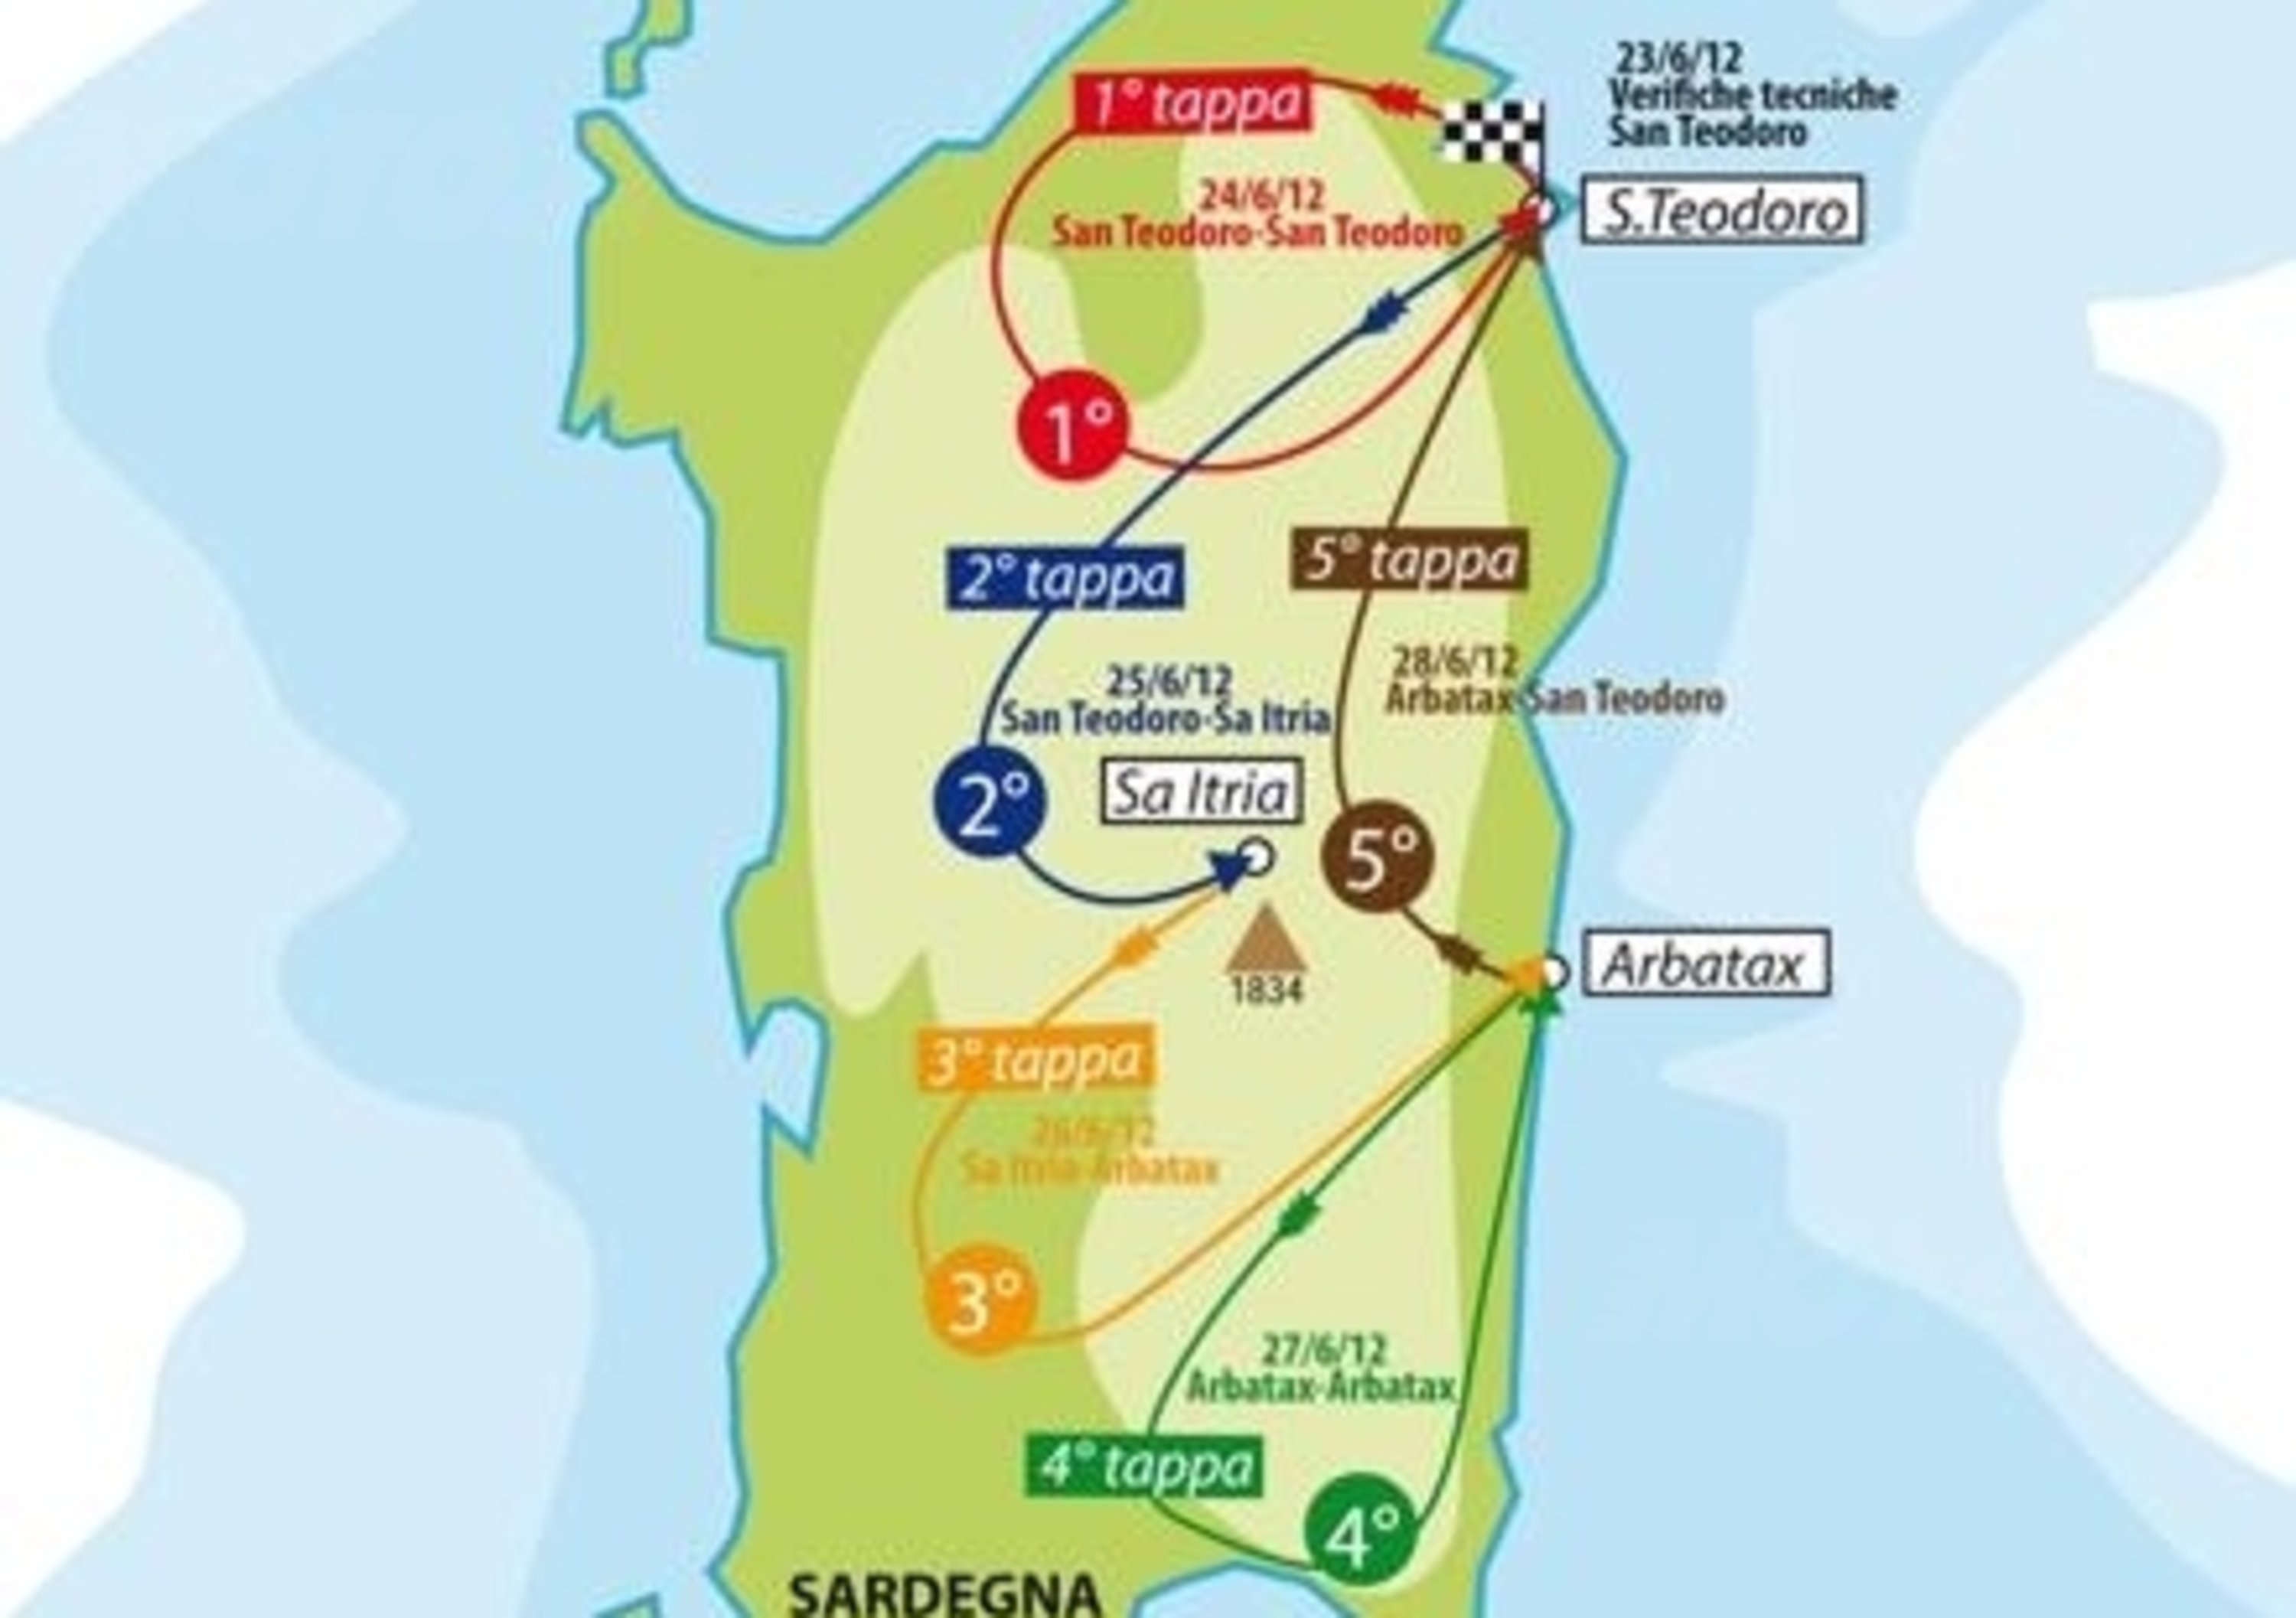 Le tappe del Sardegna Rally Race 2012